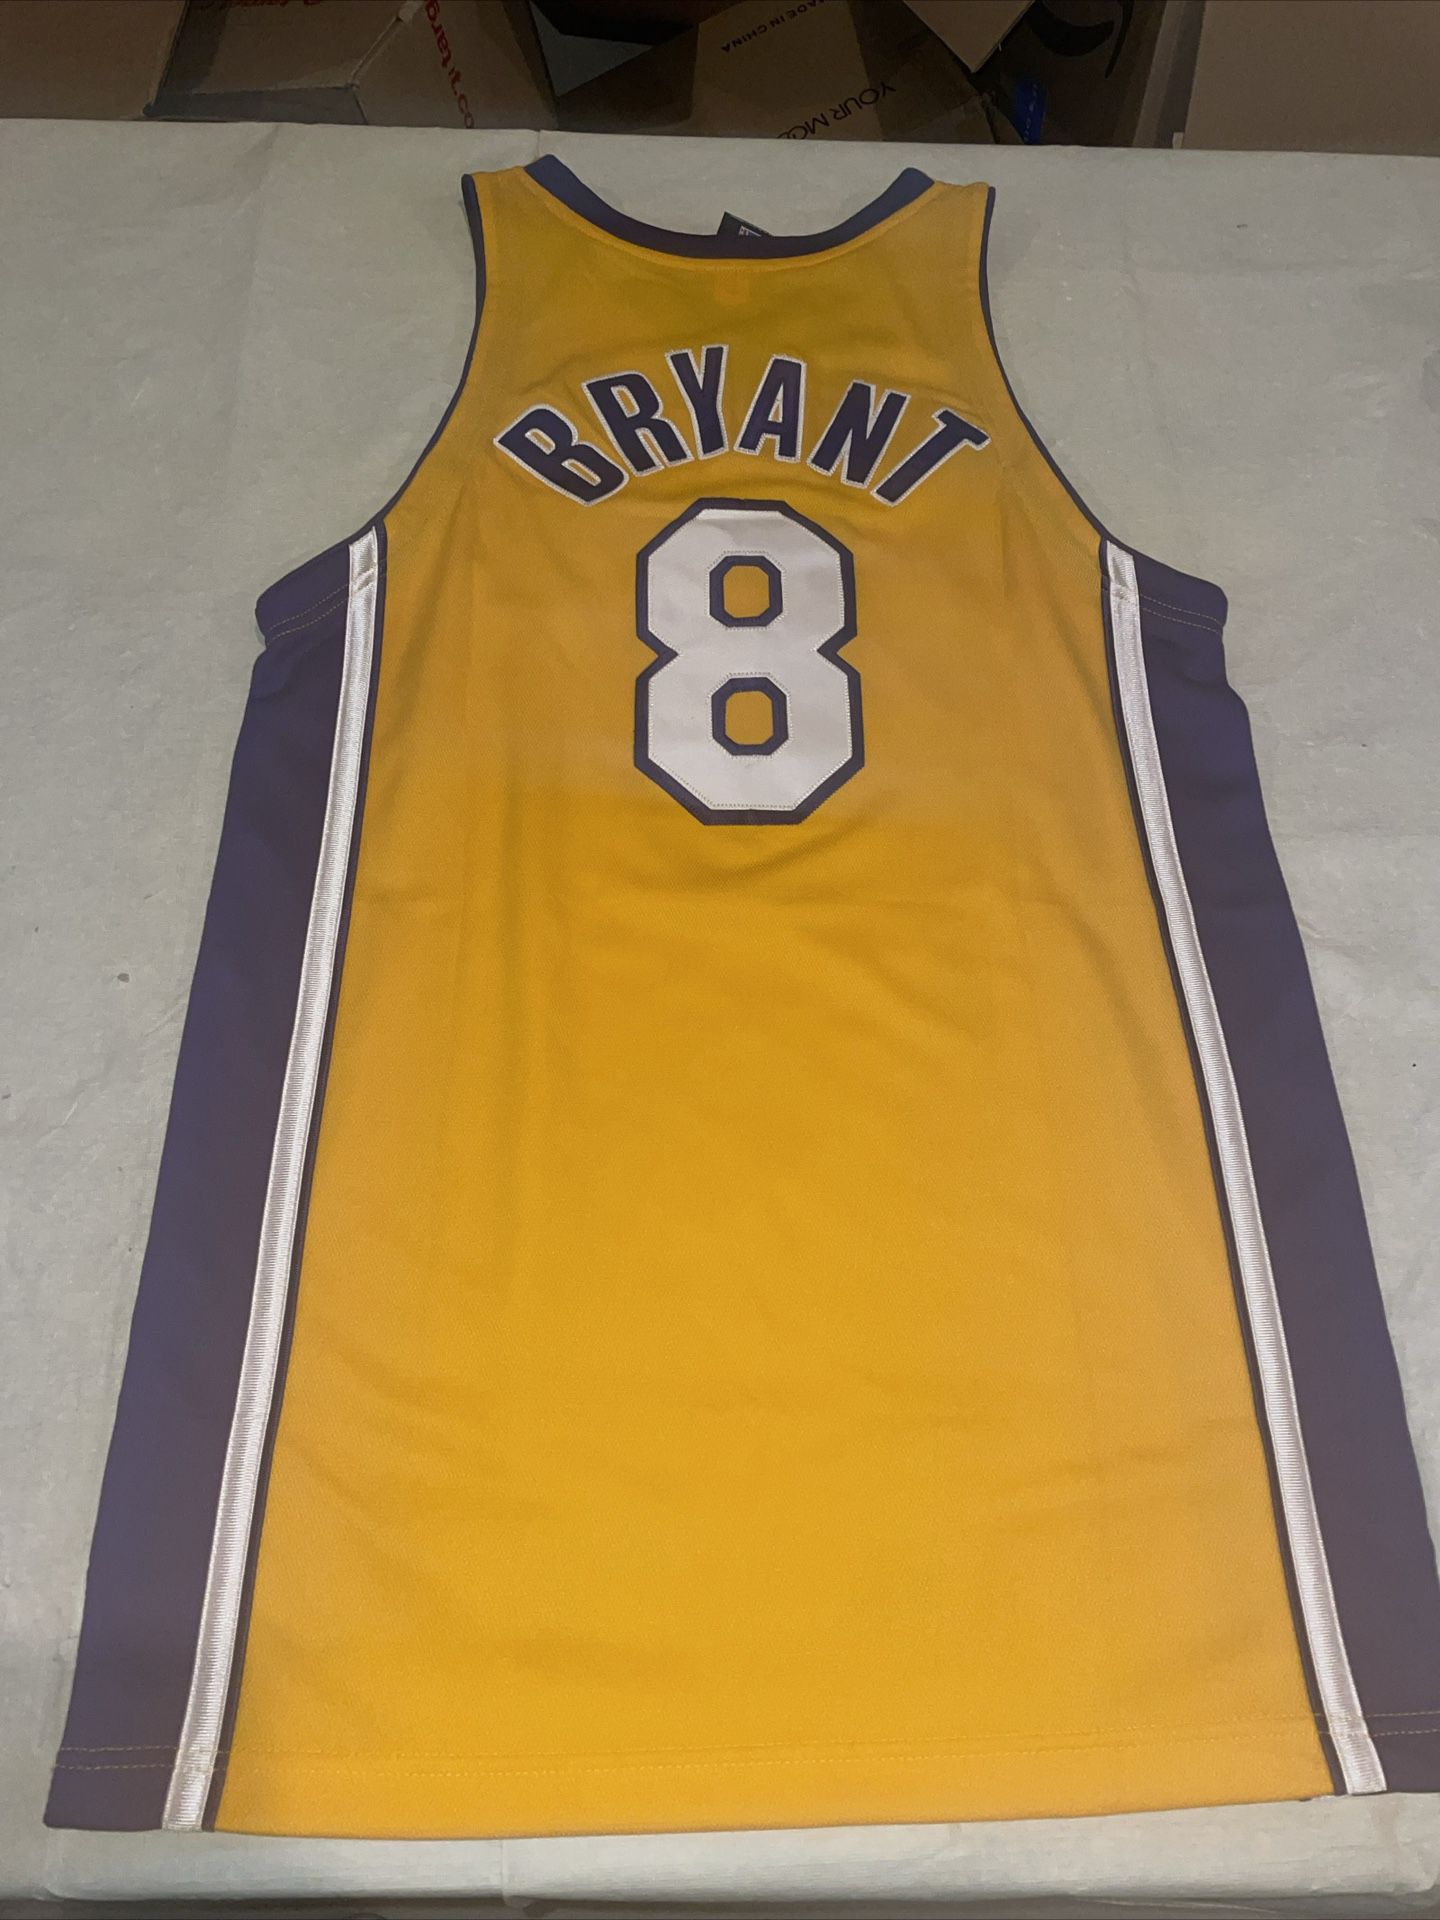 Nwt Authentic Kobe Bryant Reebok Los Angeles Lakers Jersey Mens 40 SEWN Yellow